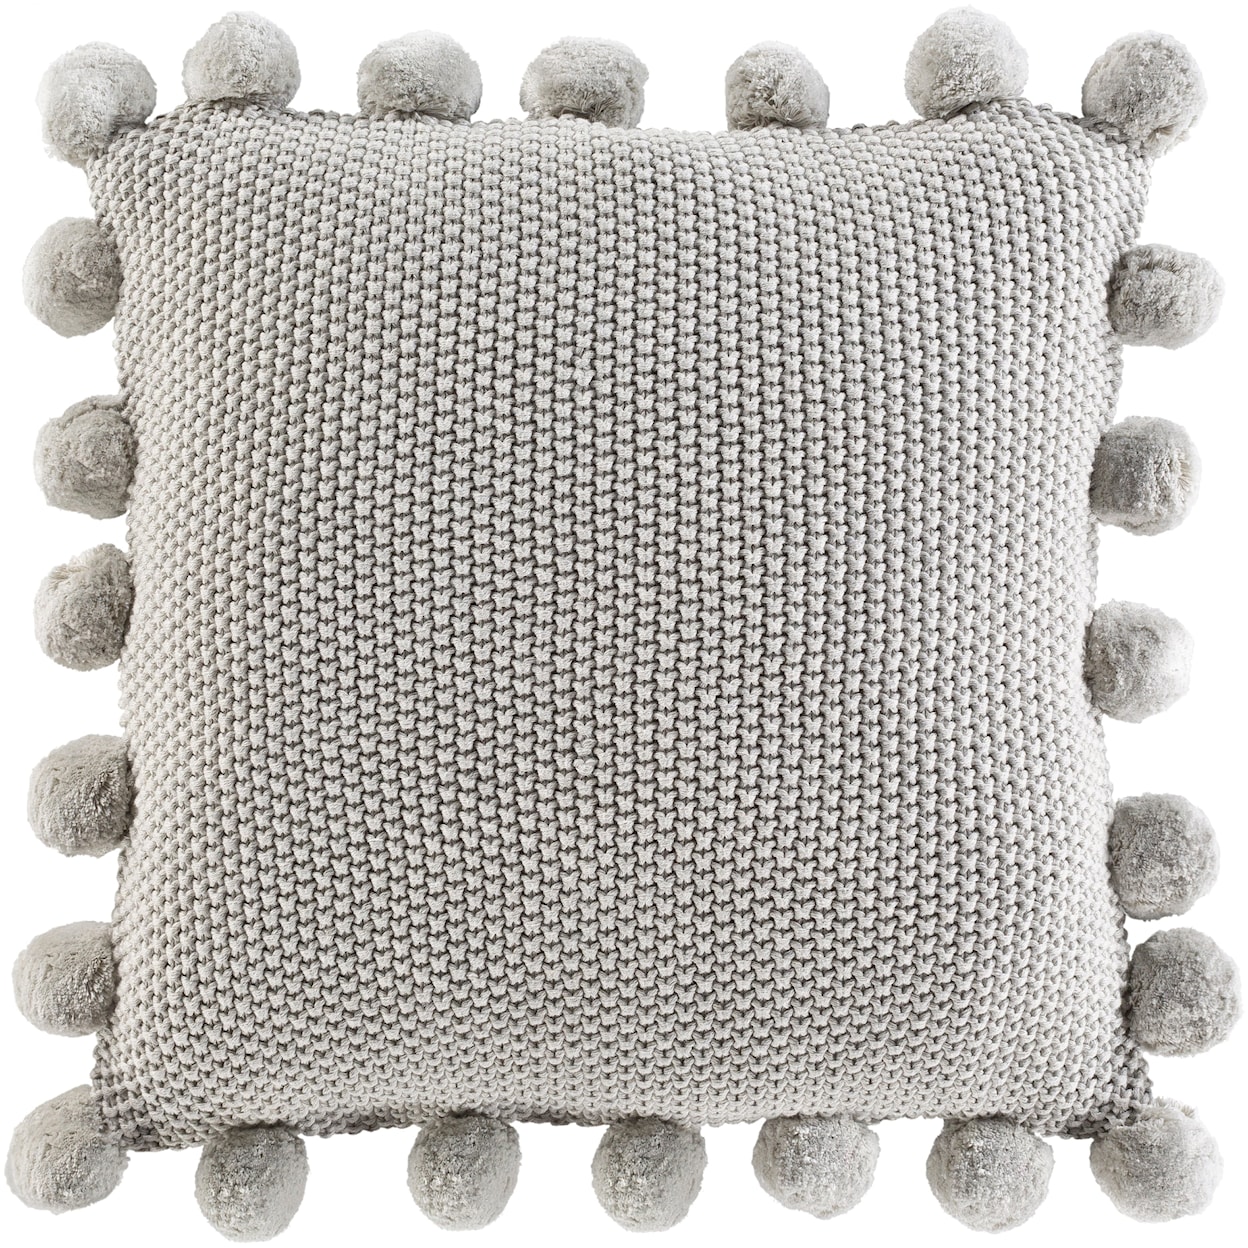 Ruby-Gordon Accents Pomtastic Pillow Kit